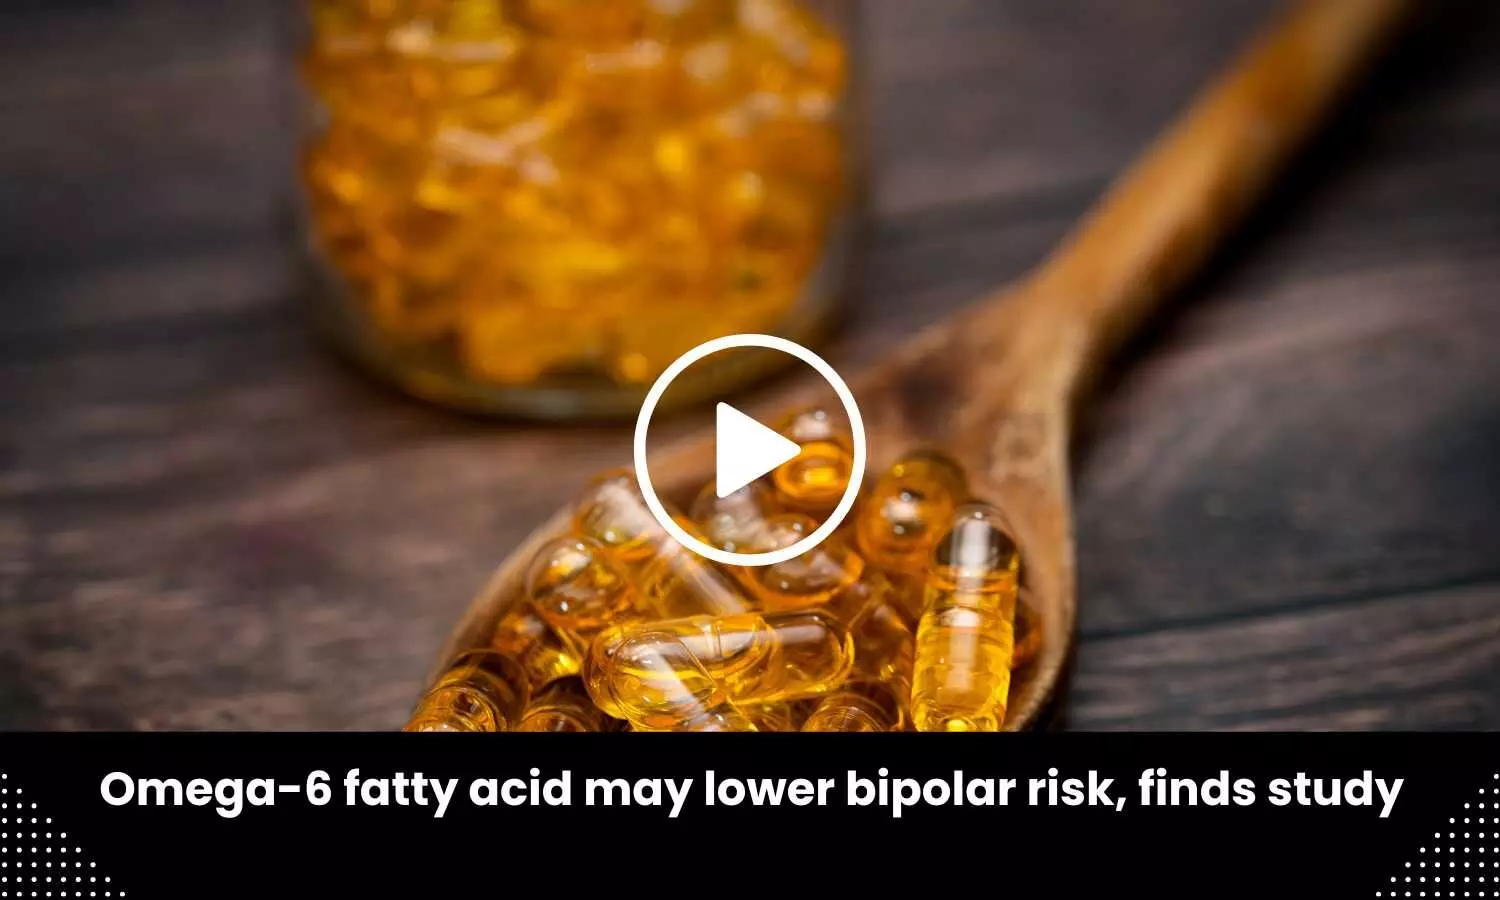 Omega-6 fatty acid may lower bipolar risk, finds study